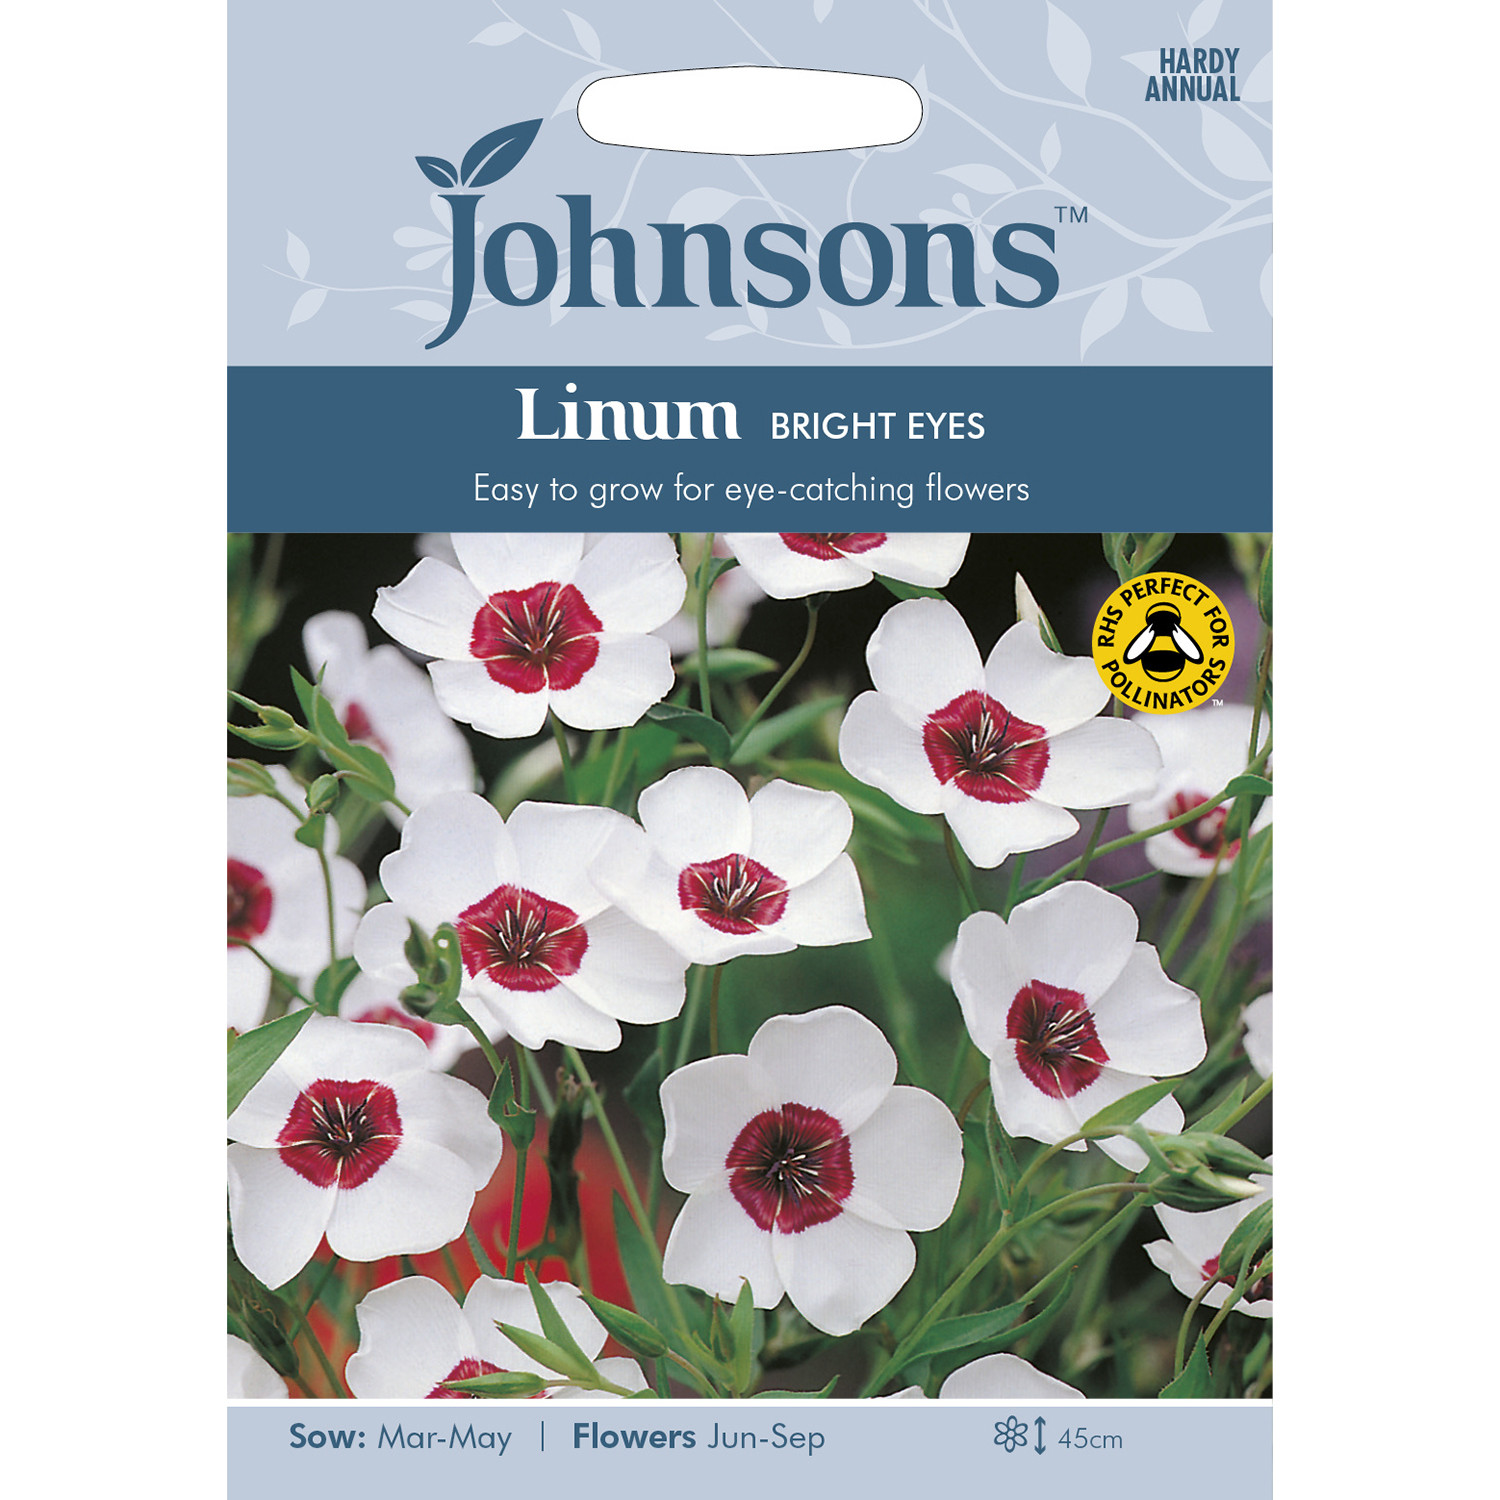 Johnsons Linum Bright Eyes Flower Seeds Image 2